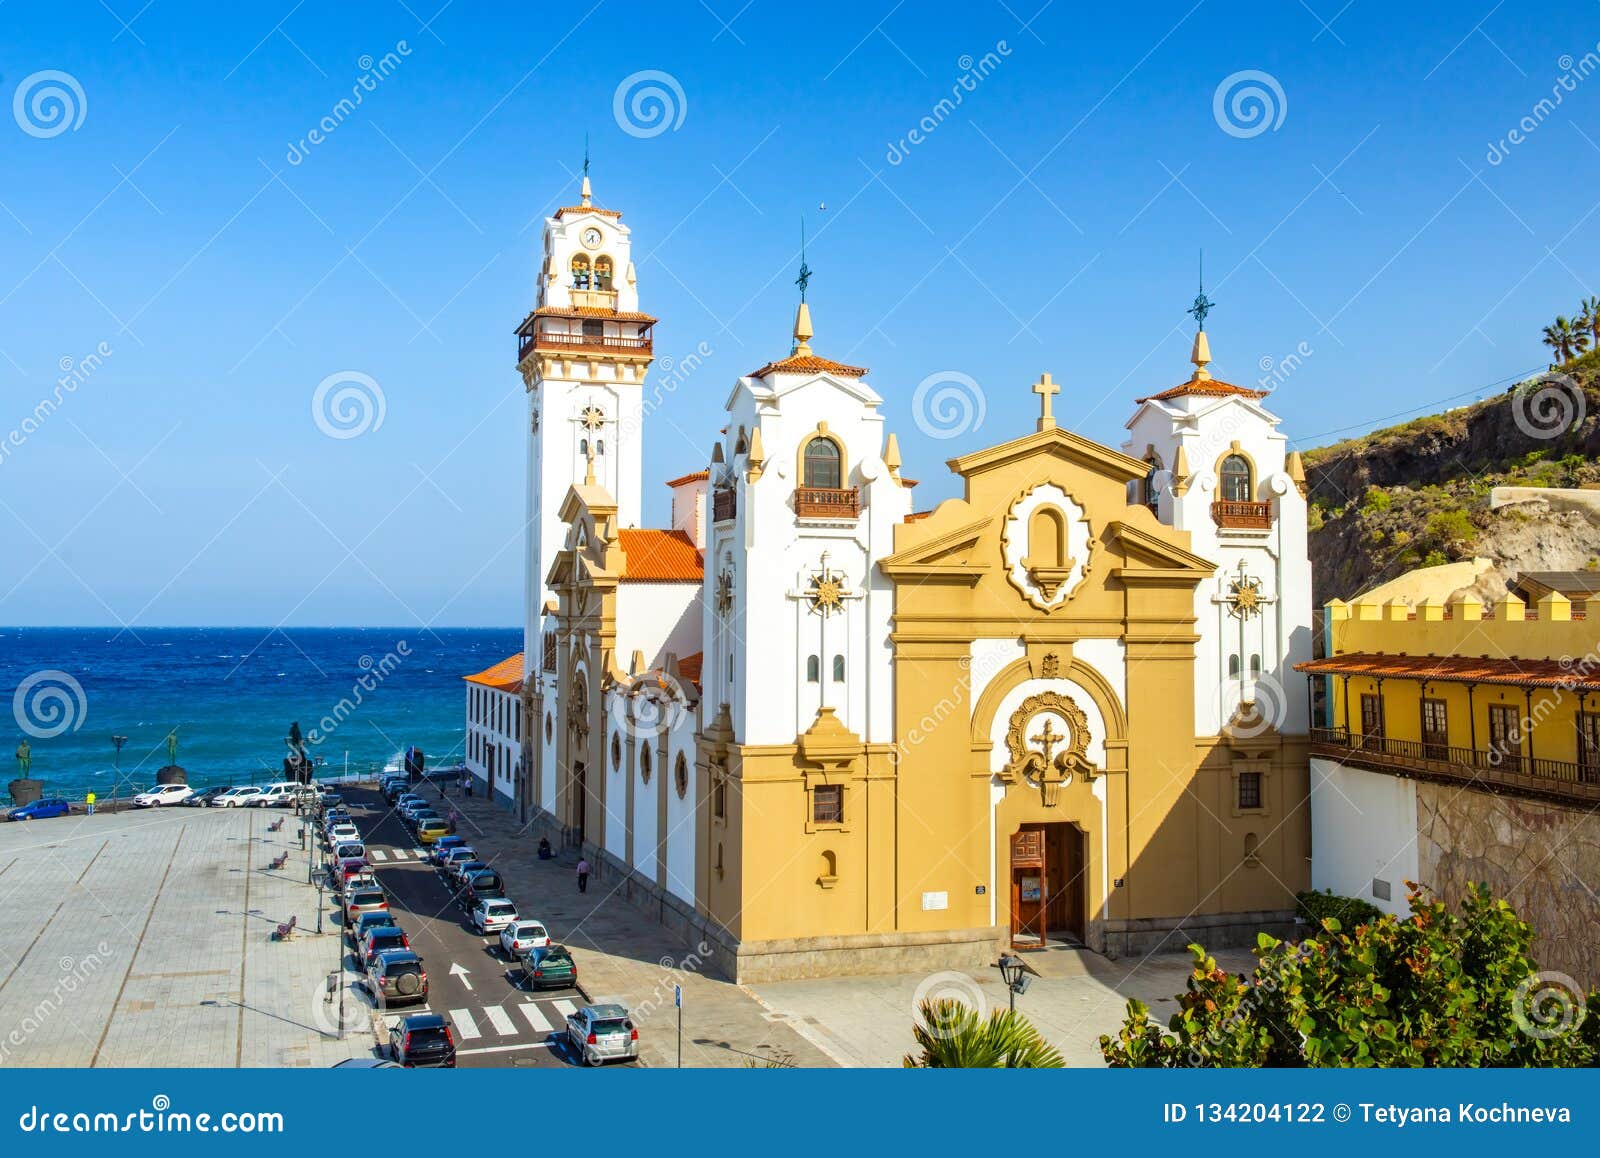 beautiful basilica de candelaria church tenerife, canary islands, spain